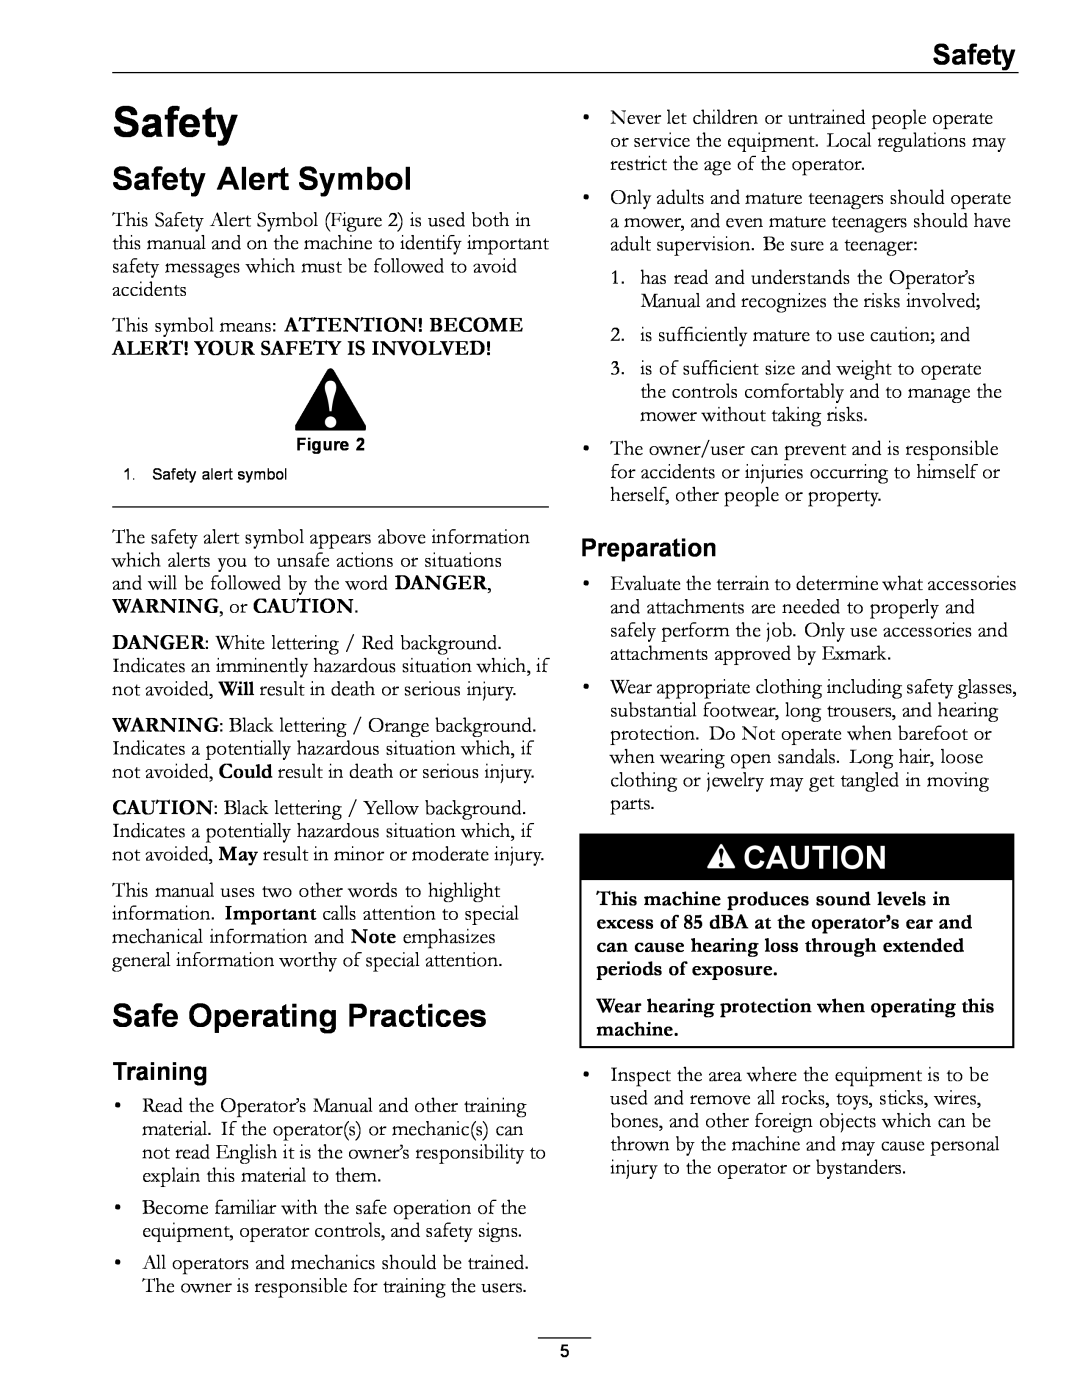 Exmark 850 manual Safety Alert Symbol, Safe Operating Practices, Training, Preparation 